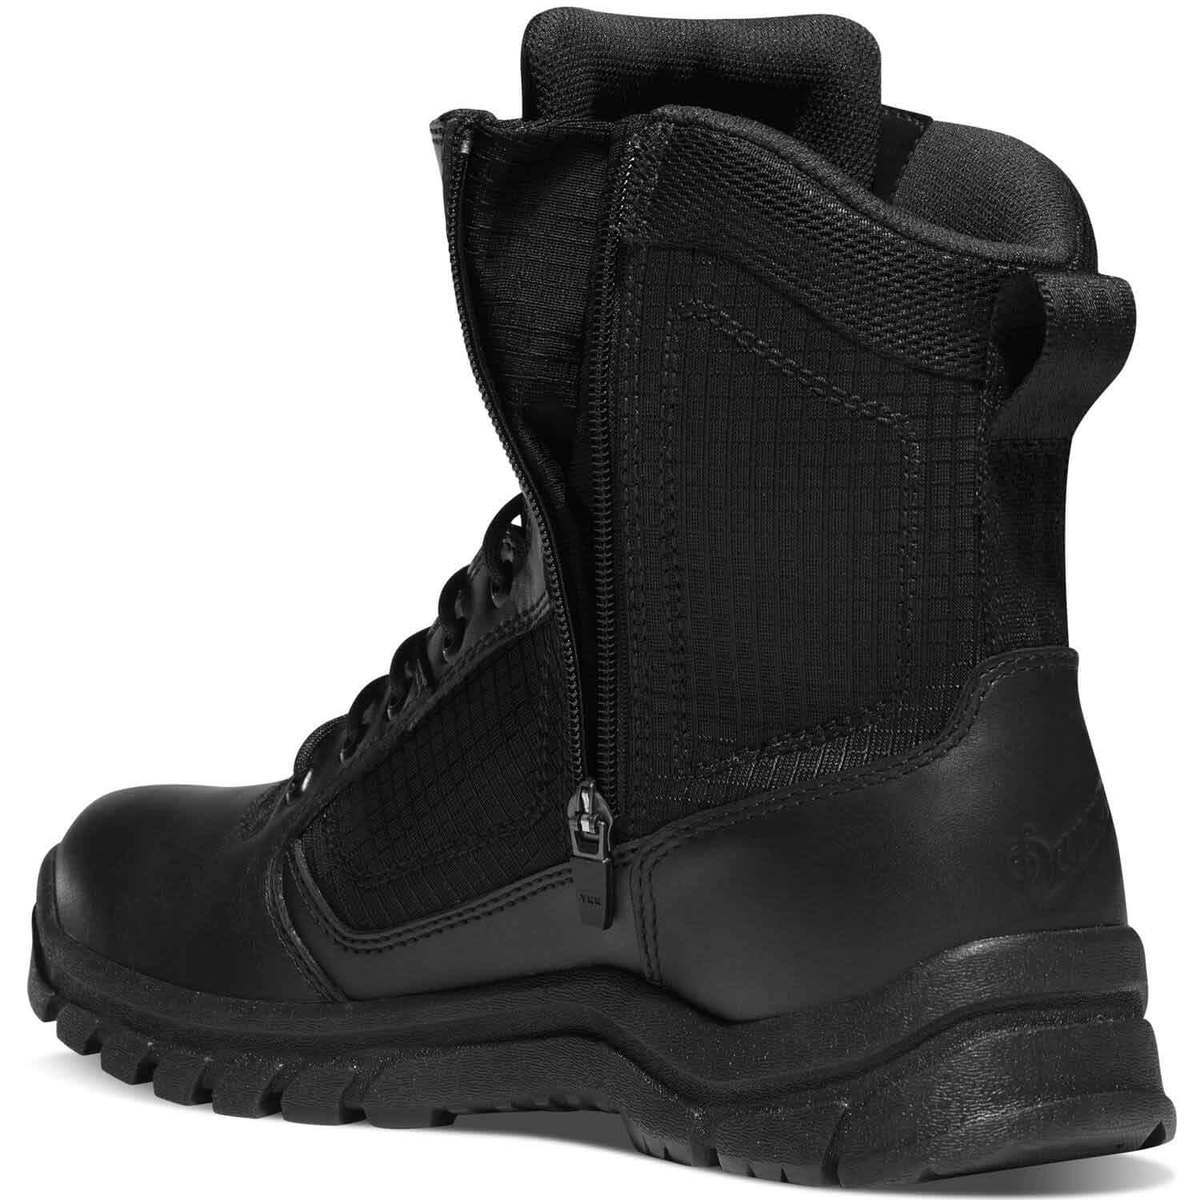 Danner Men's Lookout Side-Zip Soft Toe Work Boots - Black - Size 10.5 ...